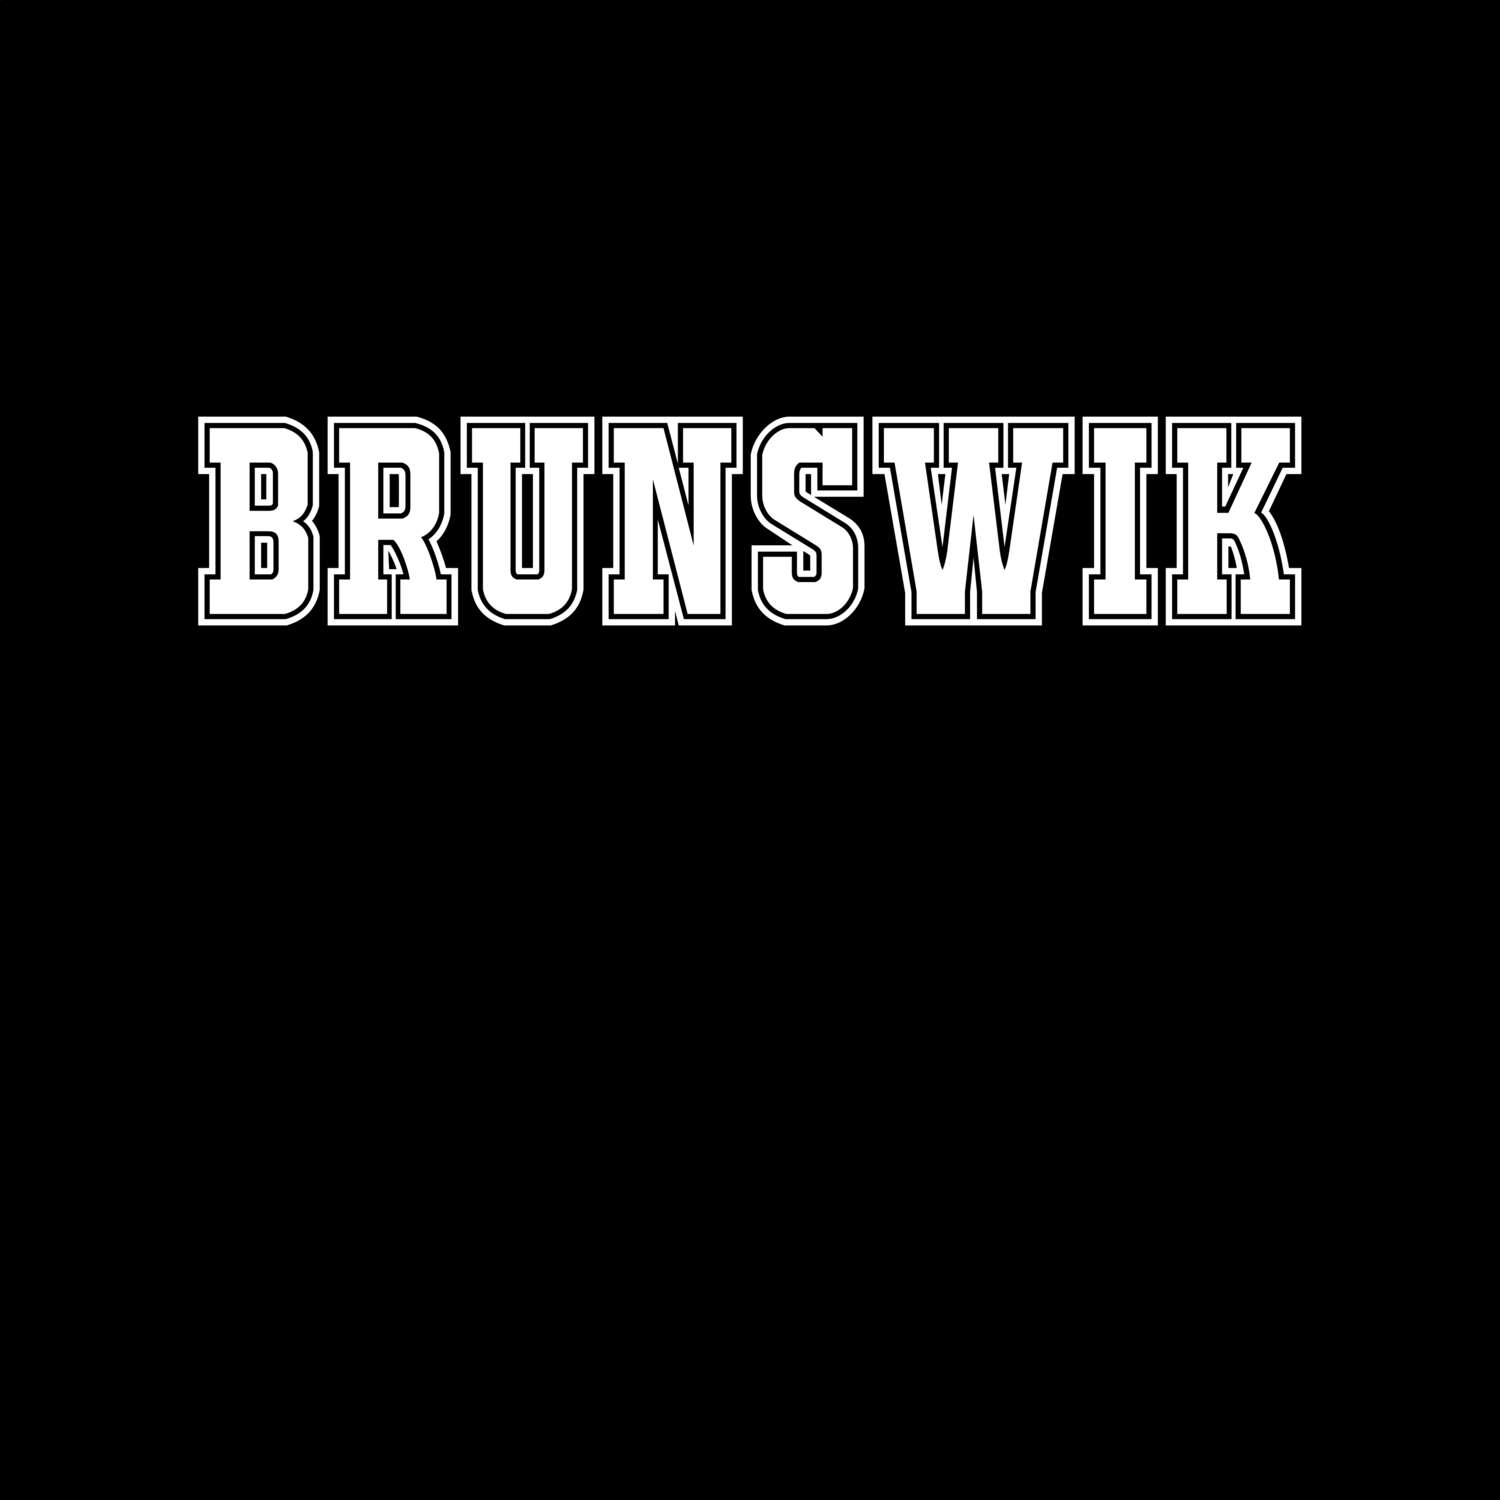 Brunswik T-Shirt »Classic«